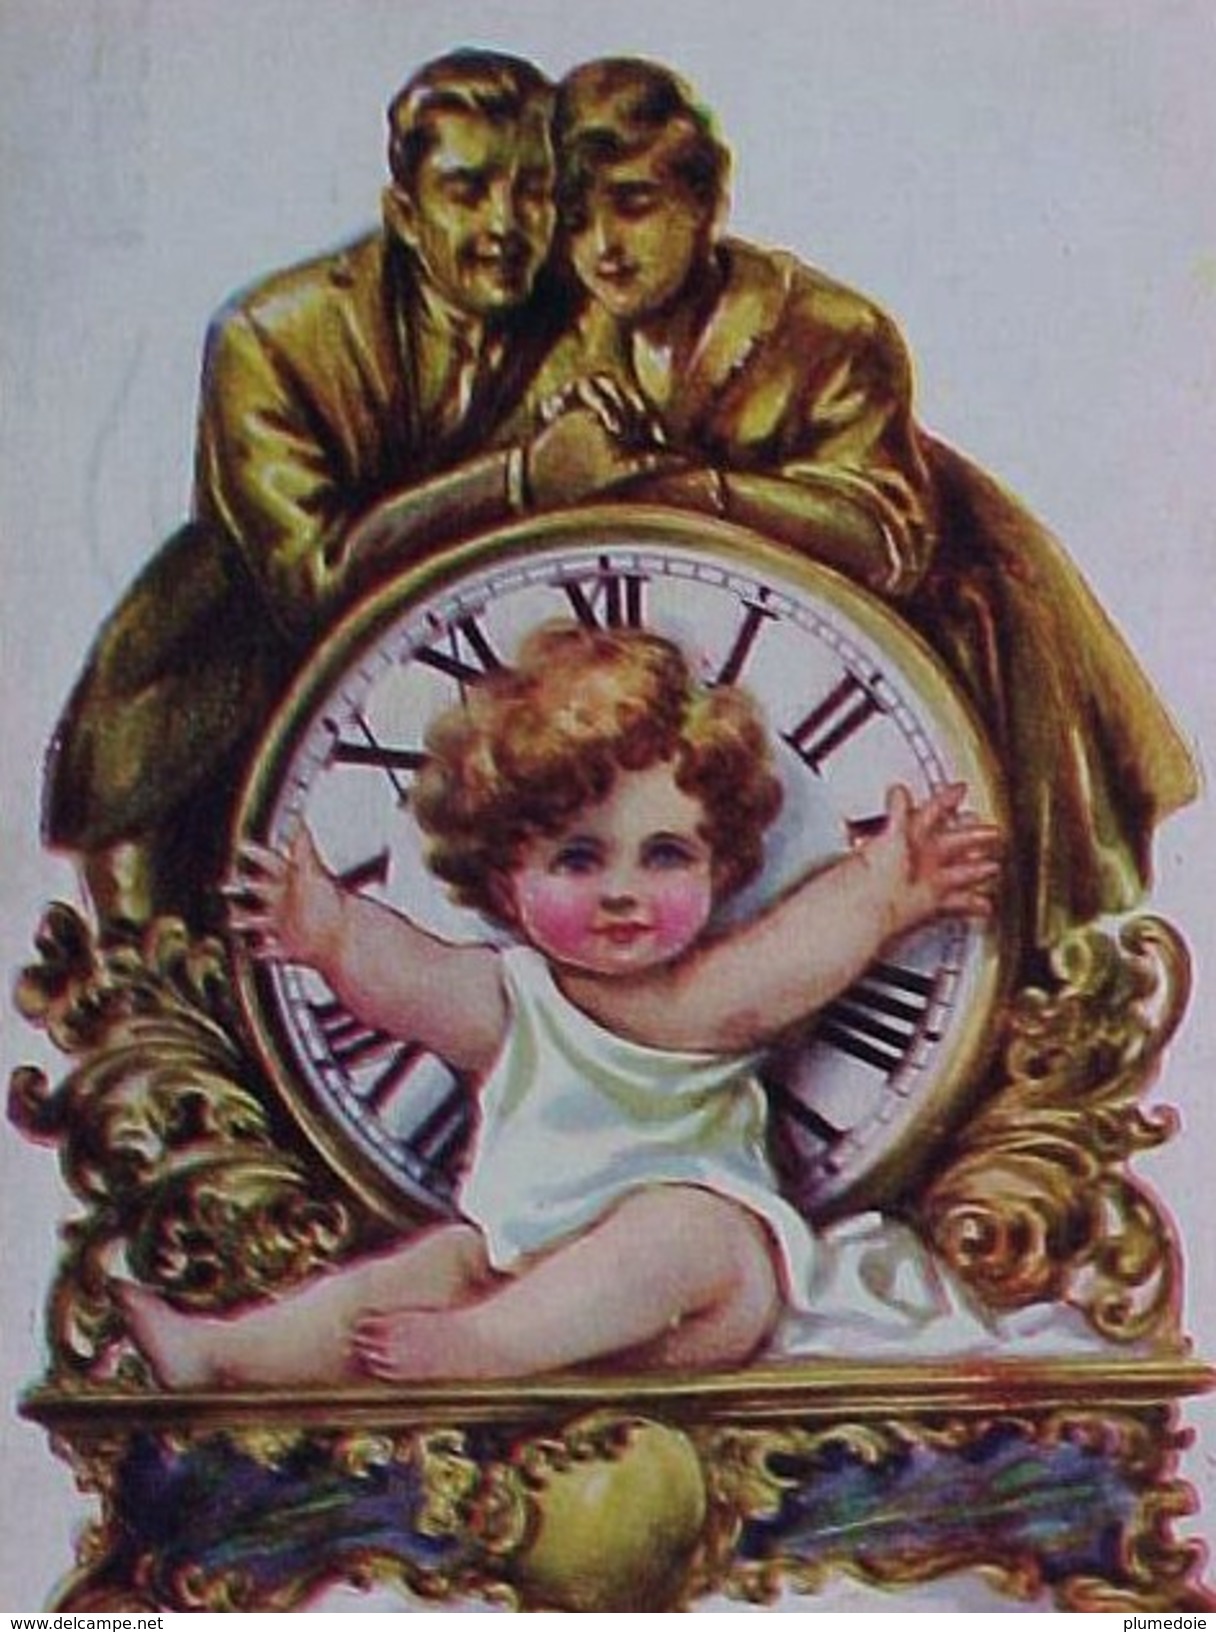 Cpa ILLUSTRATEUR FRED SPURGIN BEBE JEUNE ENFANT ASSIS CONTRE  PENDULE DOREE 1917, BABY ON A CLOCK HAPPY HOURS  A/s - Disegni Infantili